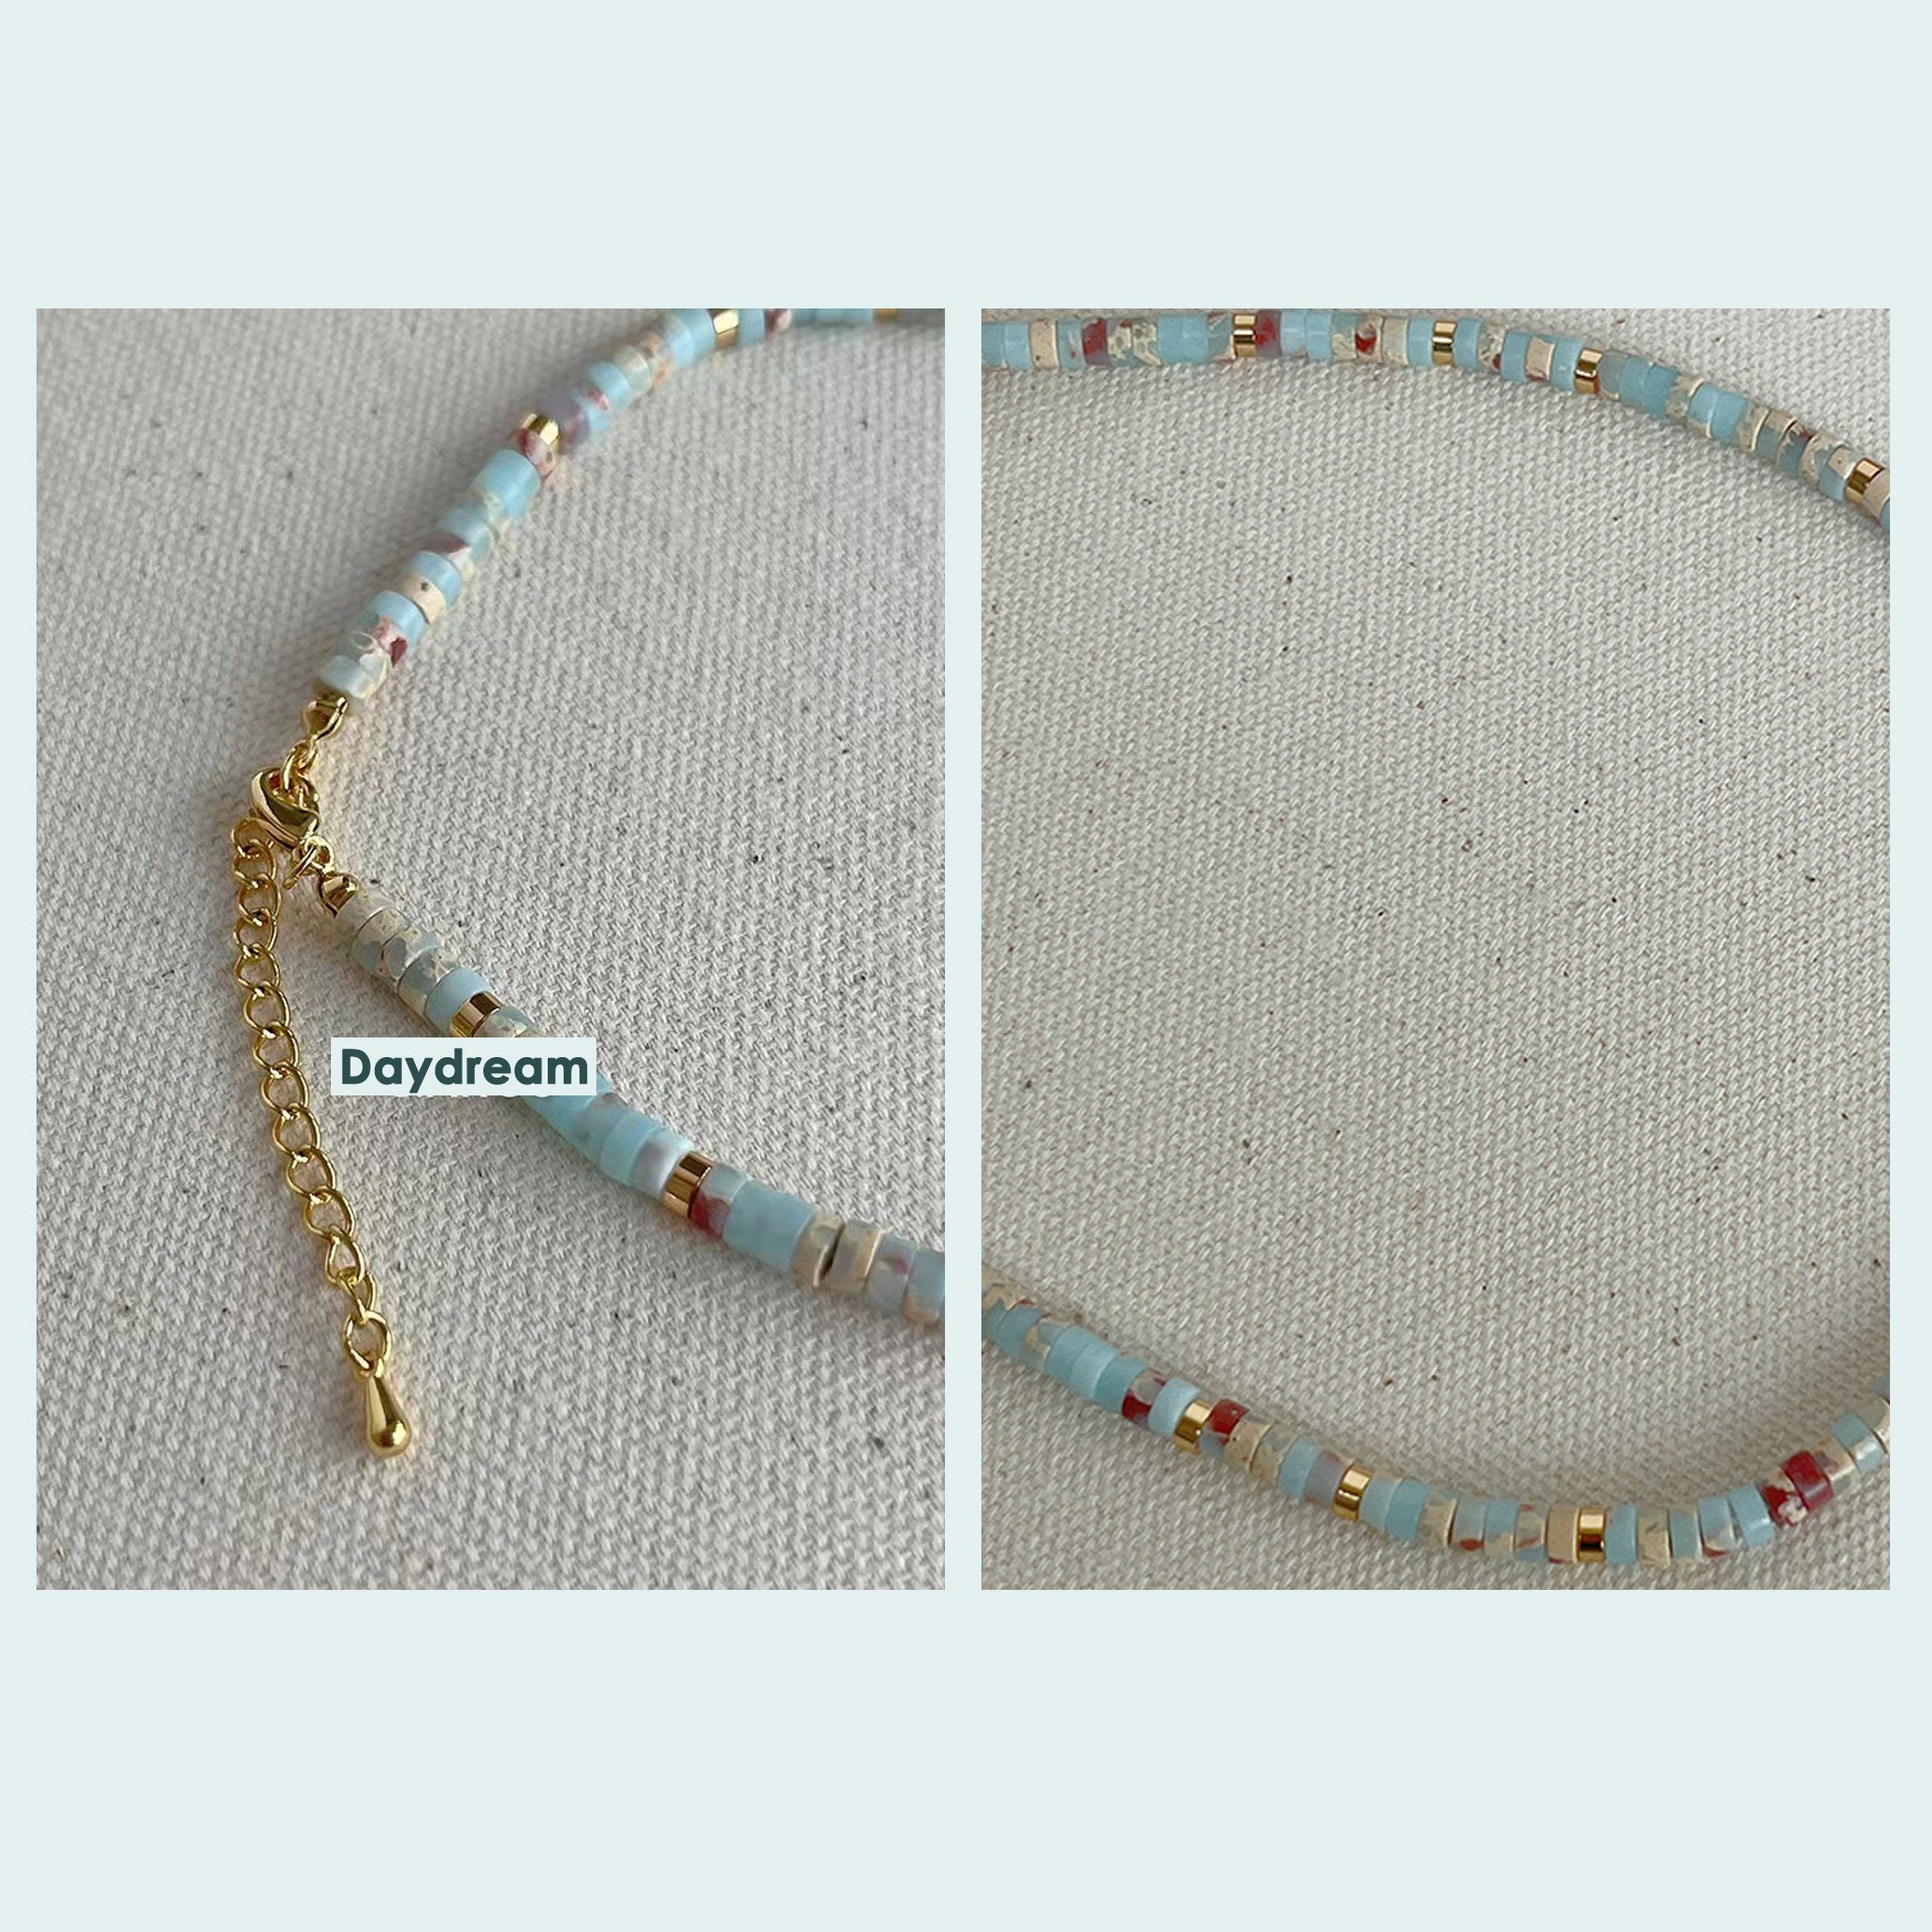 GOLDEN Medusa 18K Edelsteinen Daydream Charm-Kette Sommerliche Halskette vergoldet aus Glasperlen,